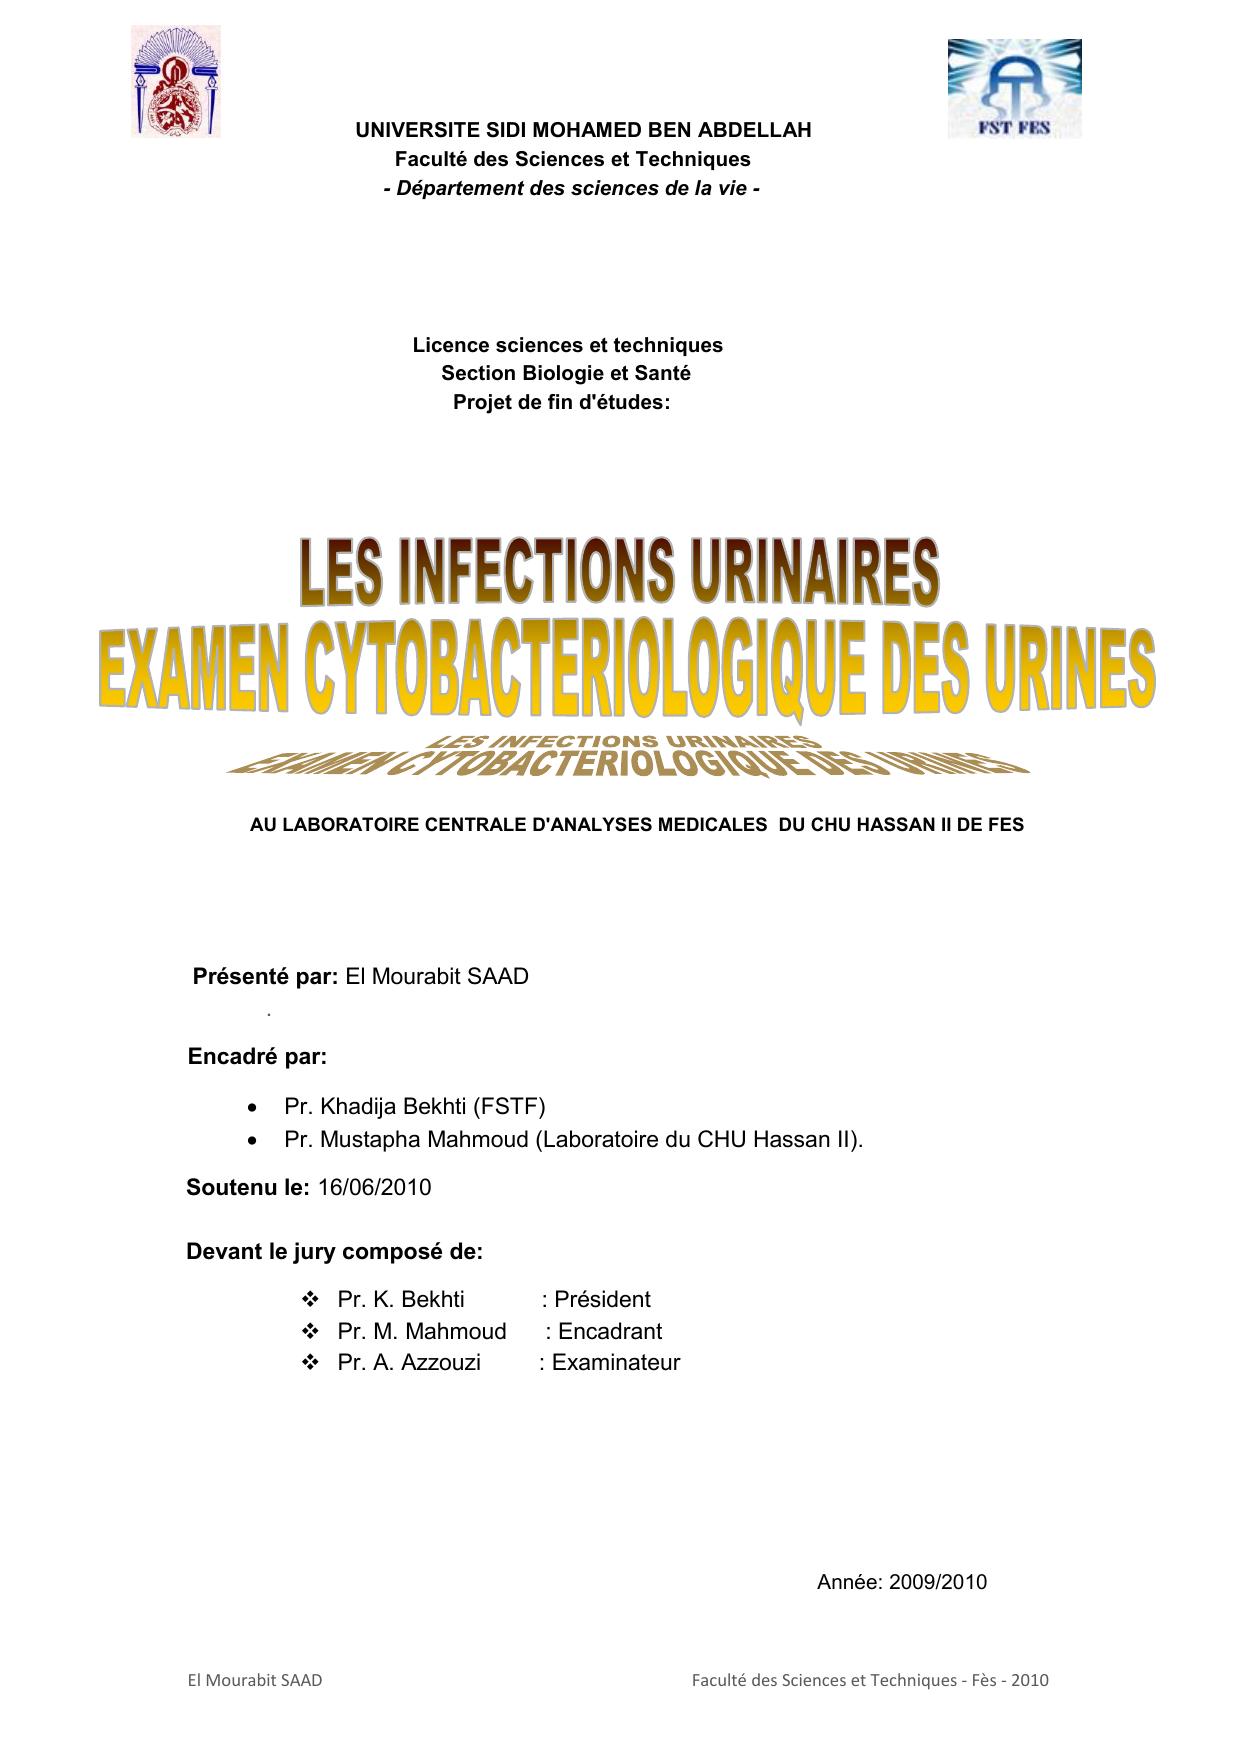 Les infections urinaires Examen Cytobactériologique des urines